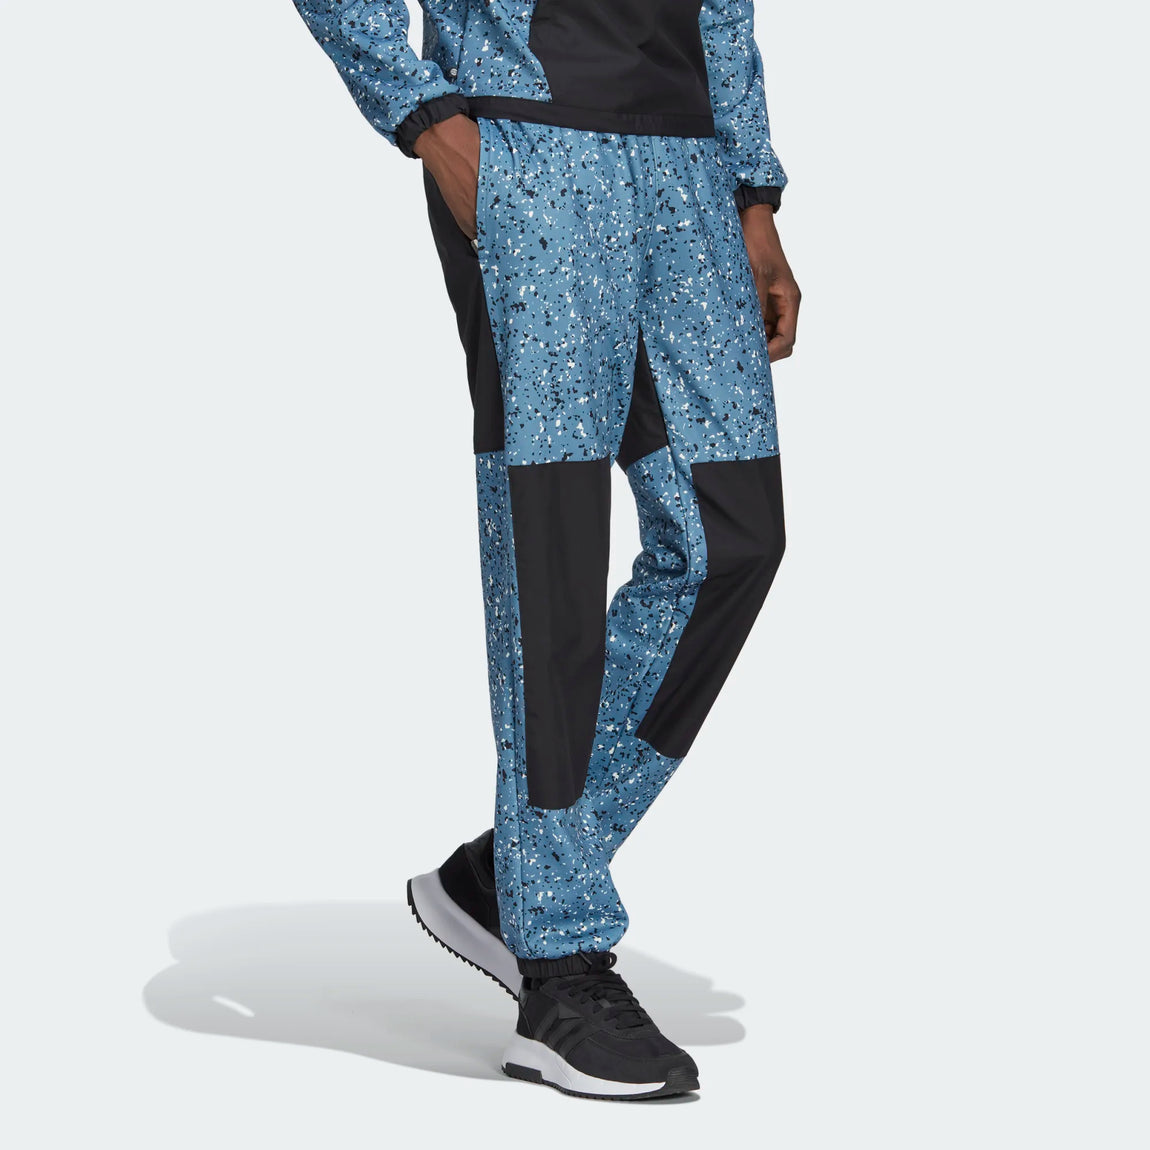 Adidas Adventure Winter Allover Print Pants (Multicolor/Altered Blue) - Adidas Adventure Winter Allover Print Pants (Multicolor/Altered Blue) - 